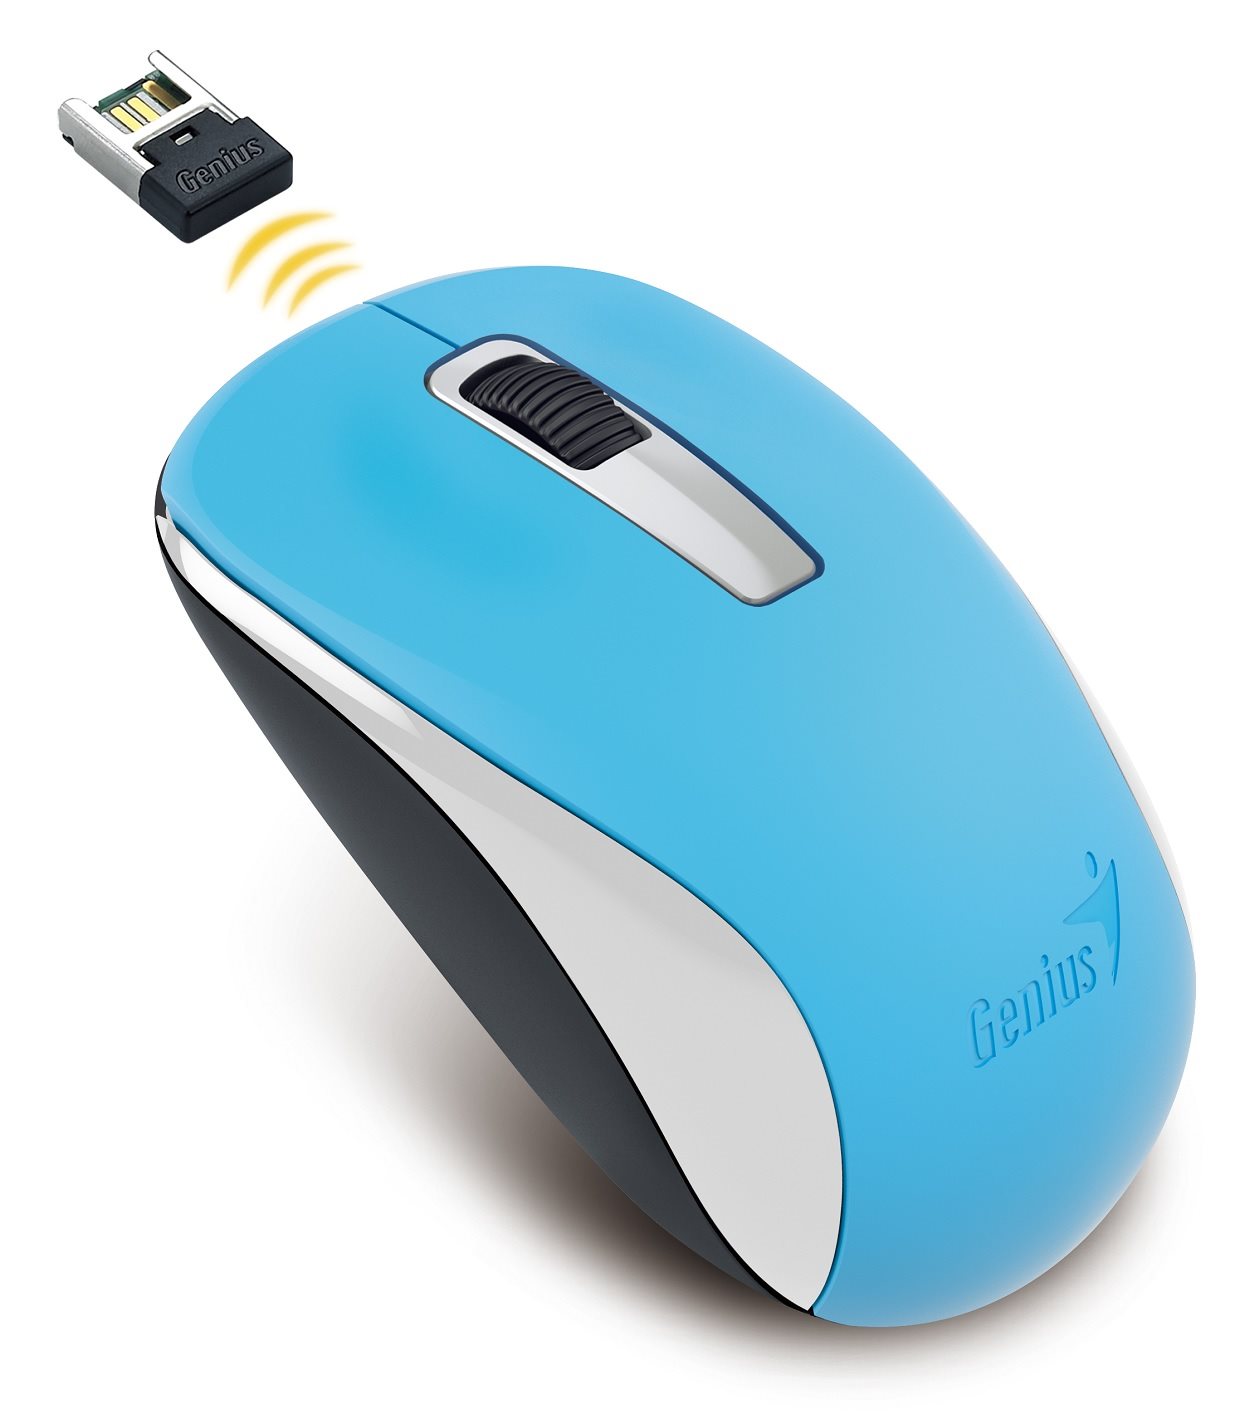 GENIUS myš NX-7005/ 1200 dpi/ bezdrátová/ modrá0 